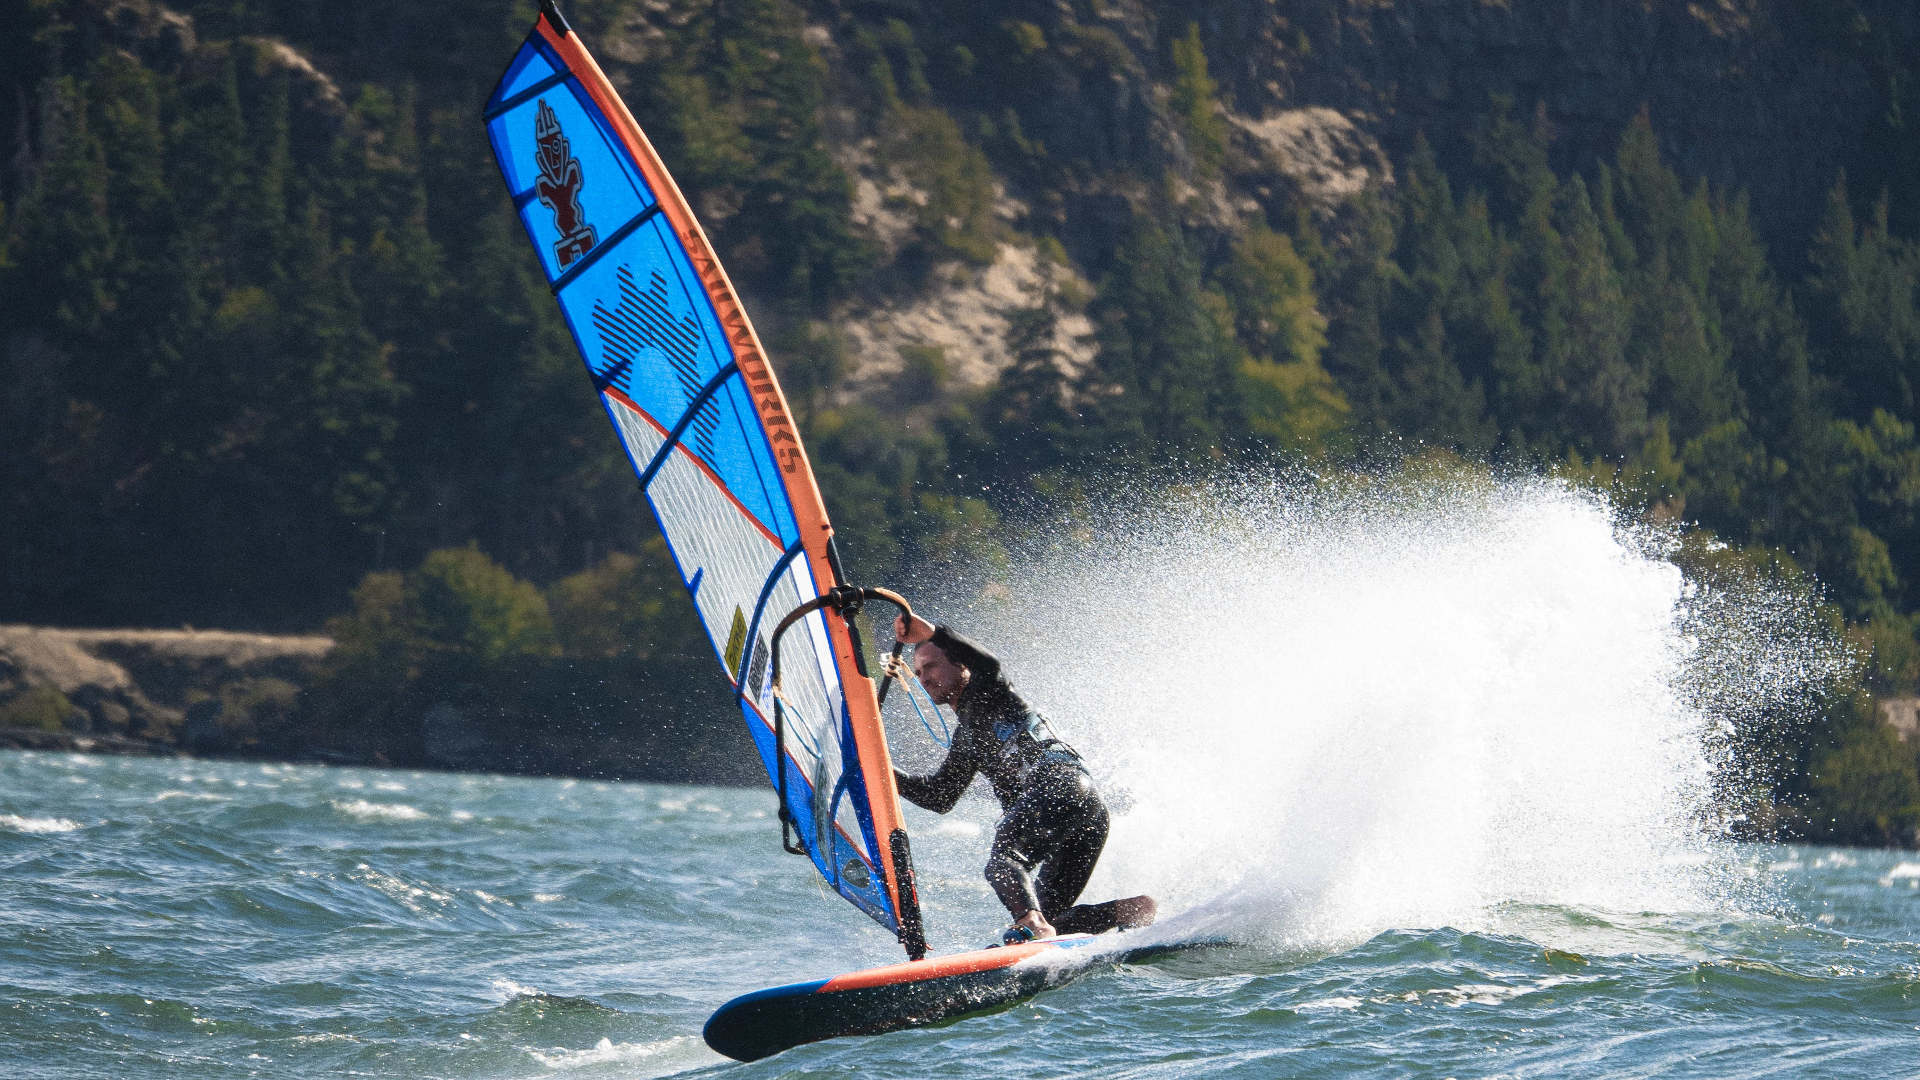 Phil Soltysiak windsurfing Gorge wave